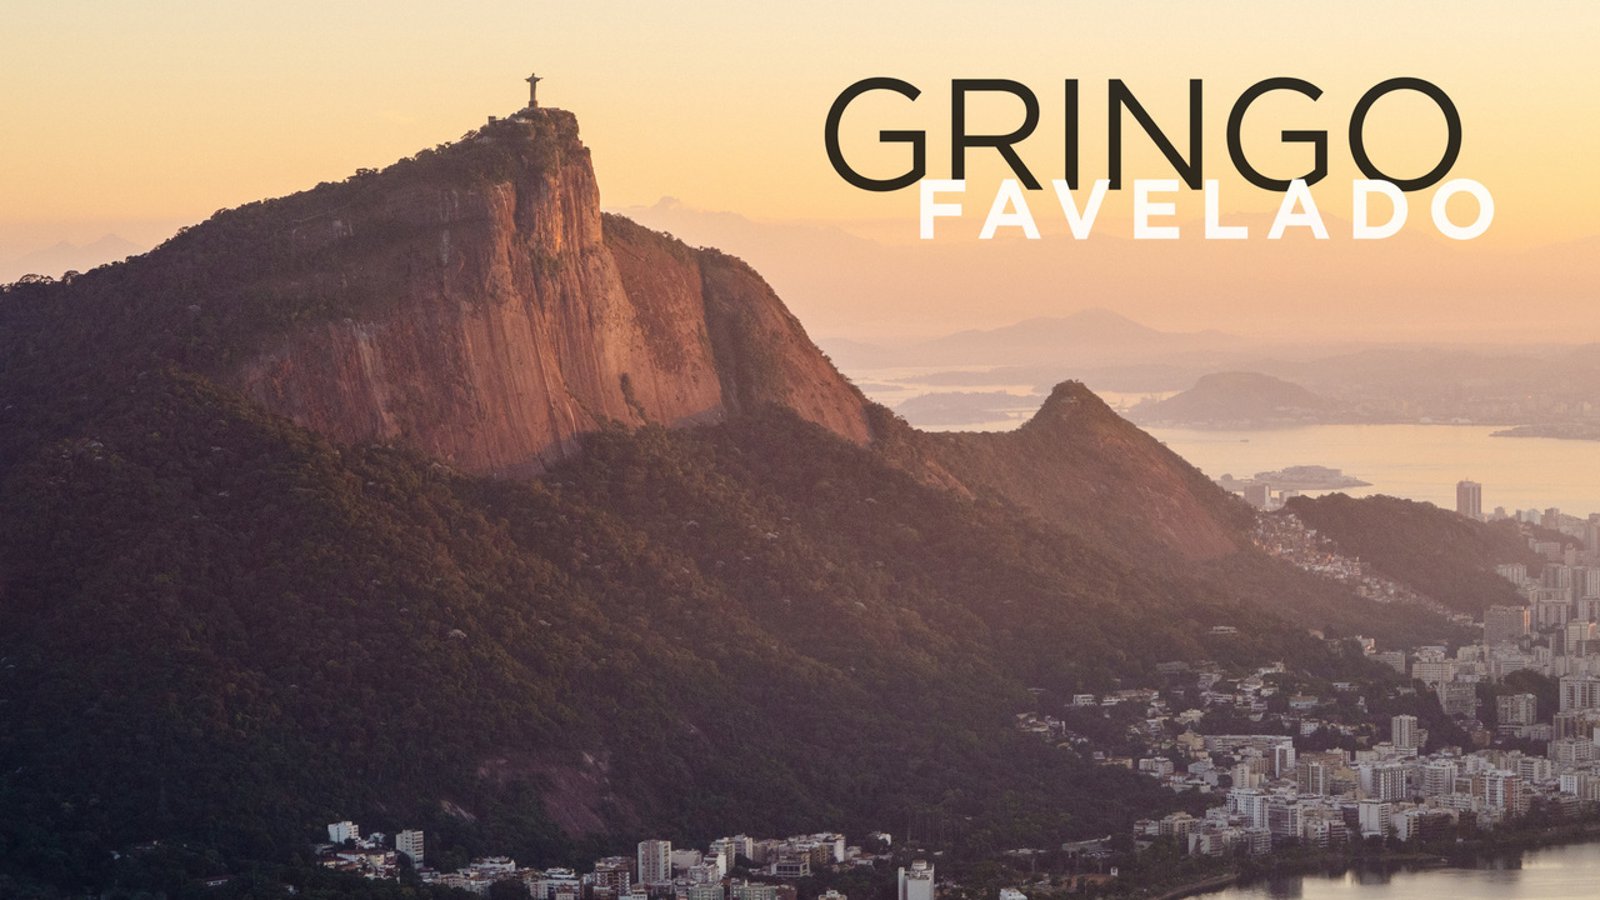 Gringo Favelado - British Expats Living in Brazilian Favela Communities